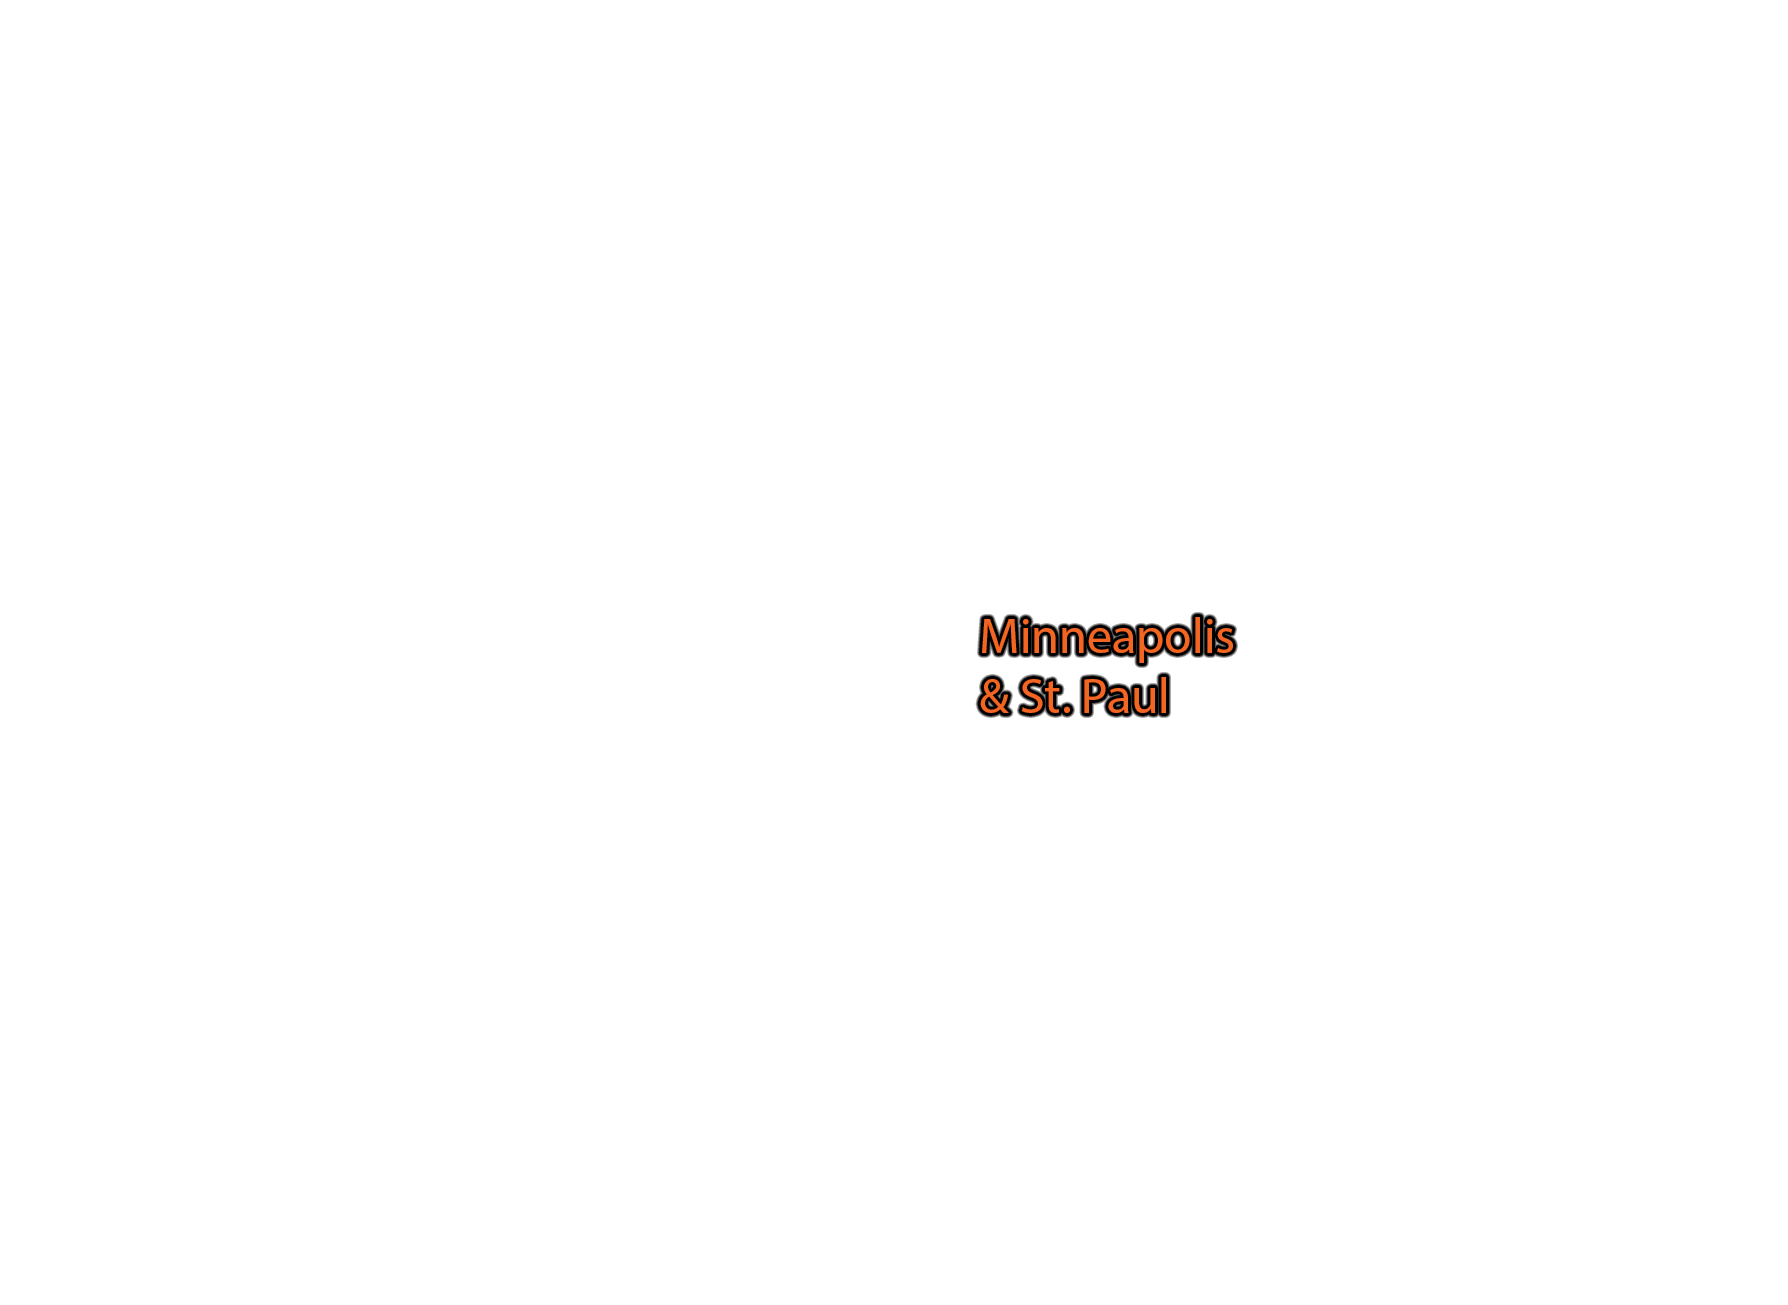 Minneapolis-&-St.-Paul label with glow